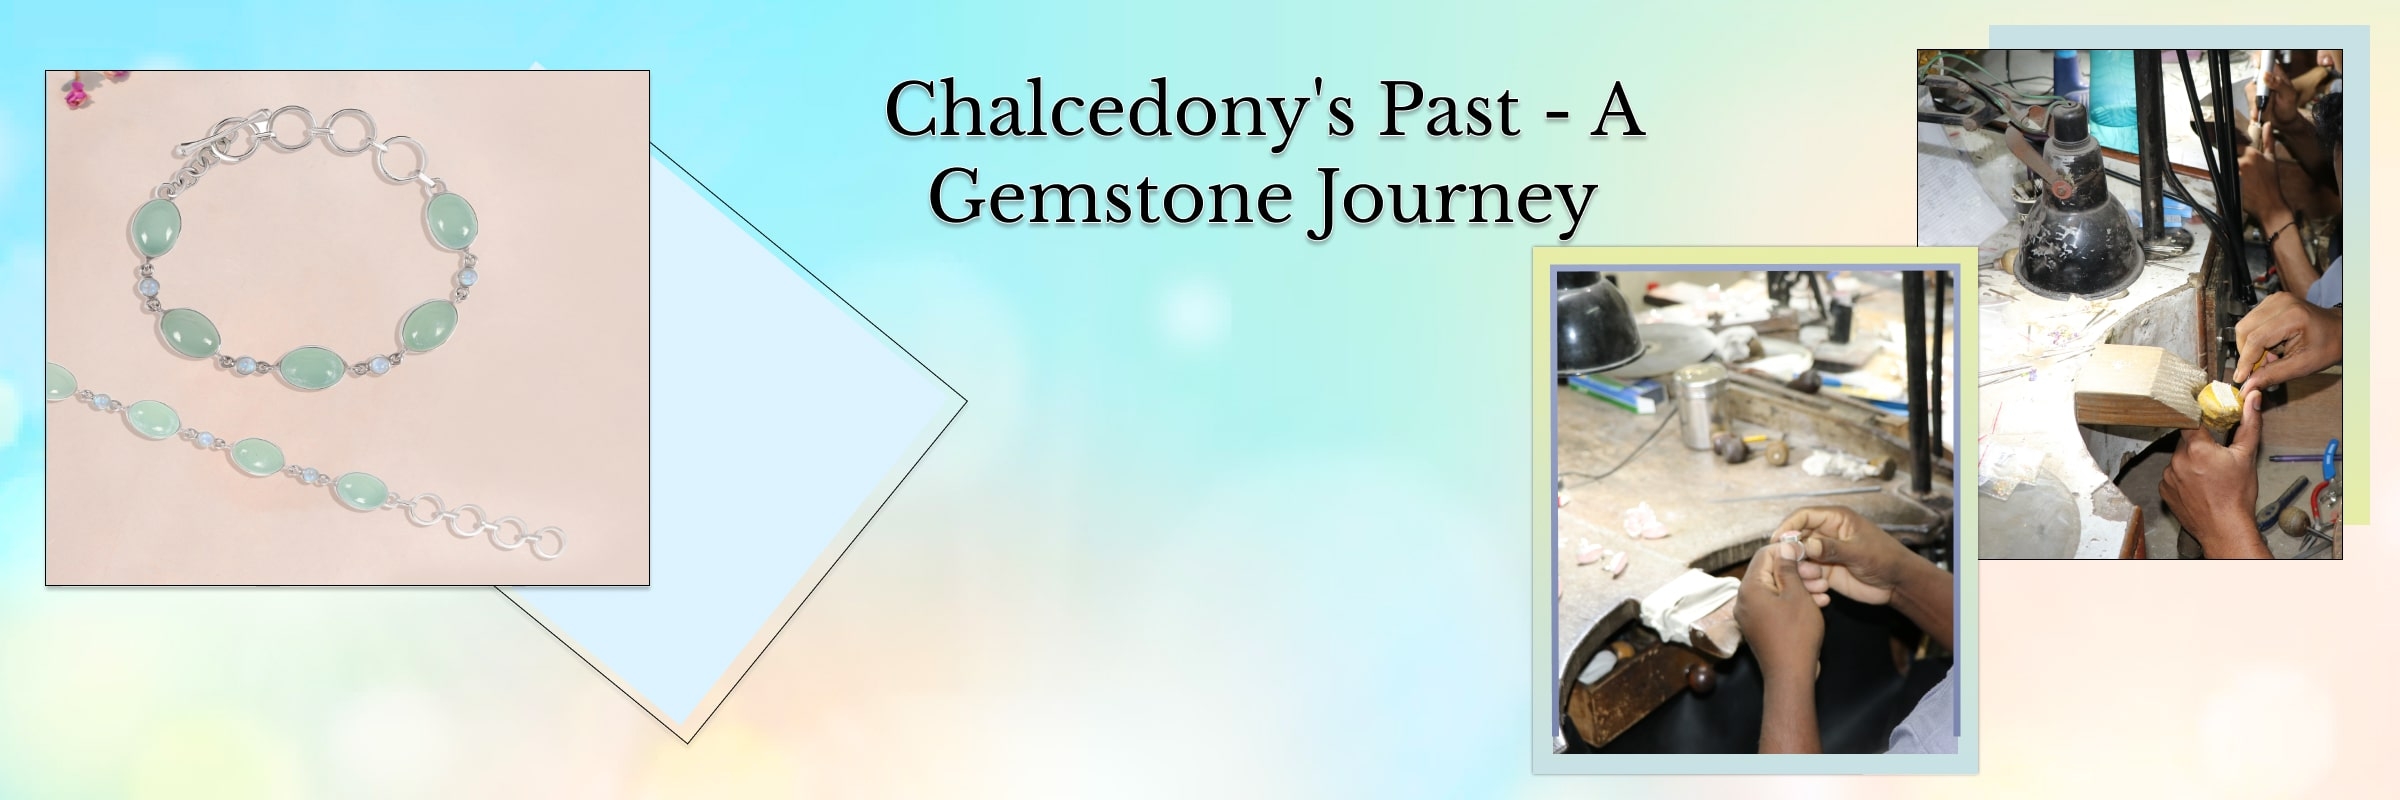 History of Chalcedony Gemstone